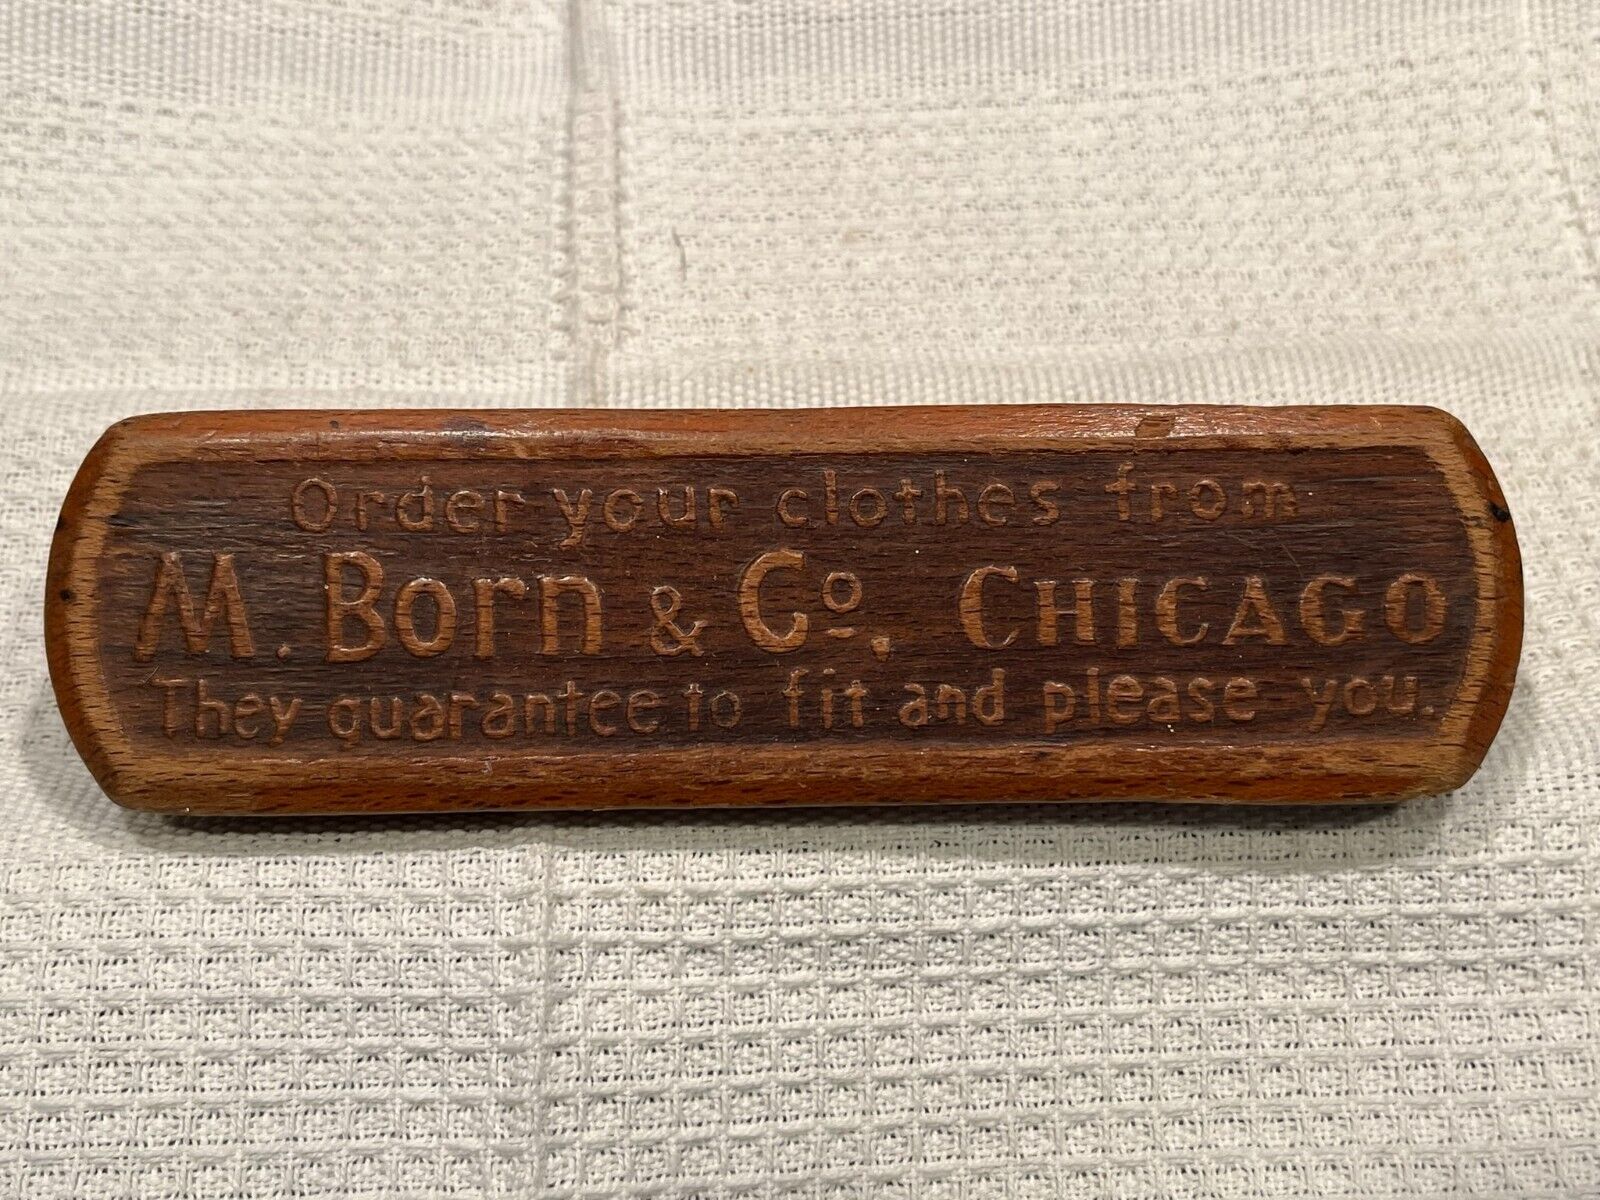 Antique M. Born & Co. Chicago Clothing Advertising Shoe Brush